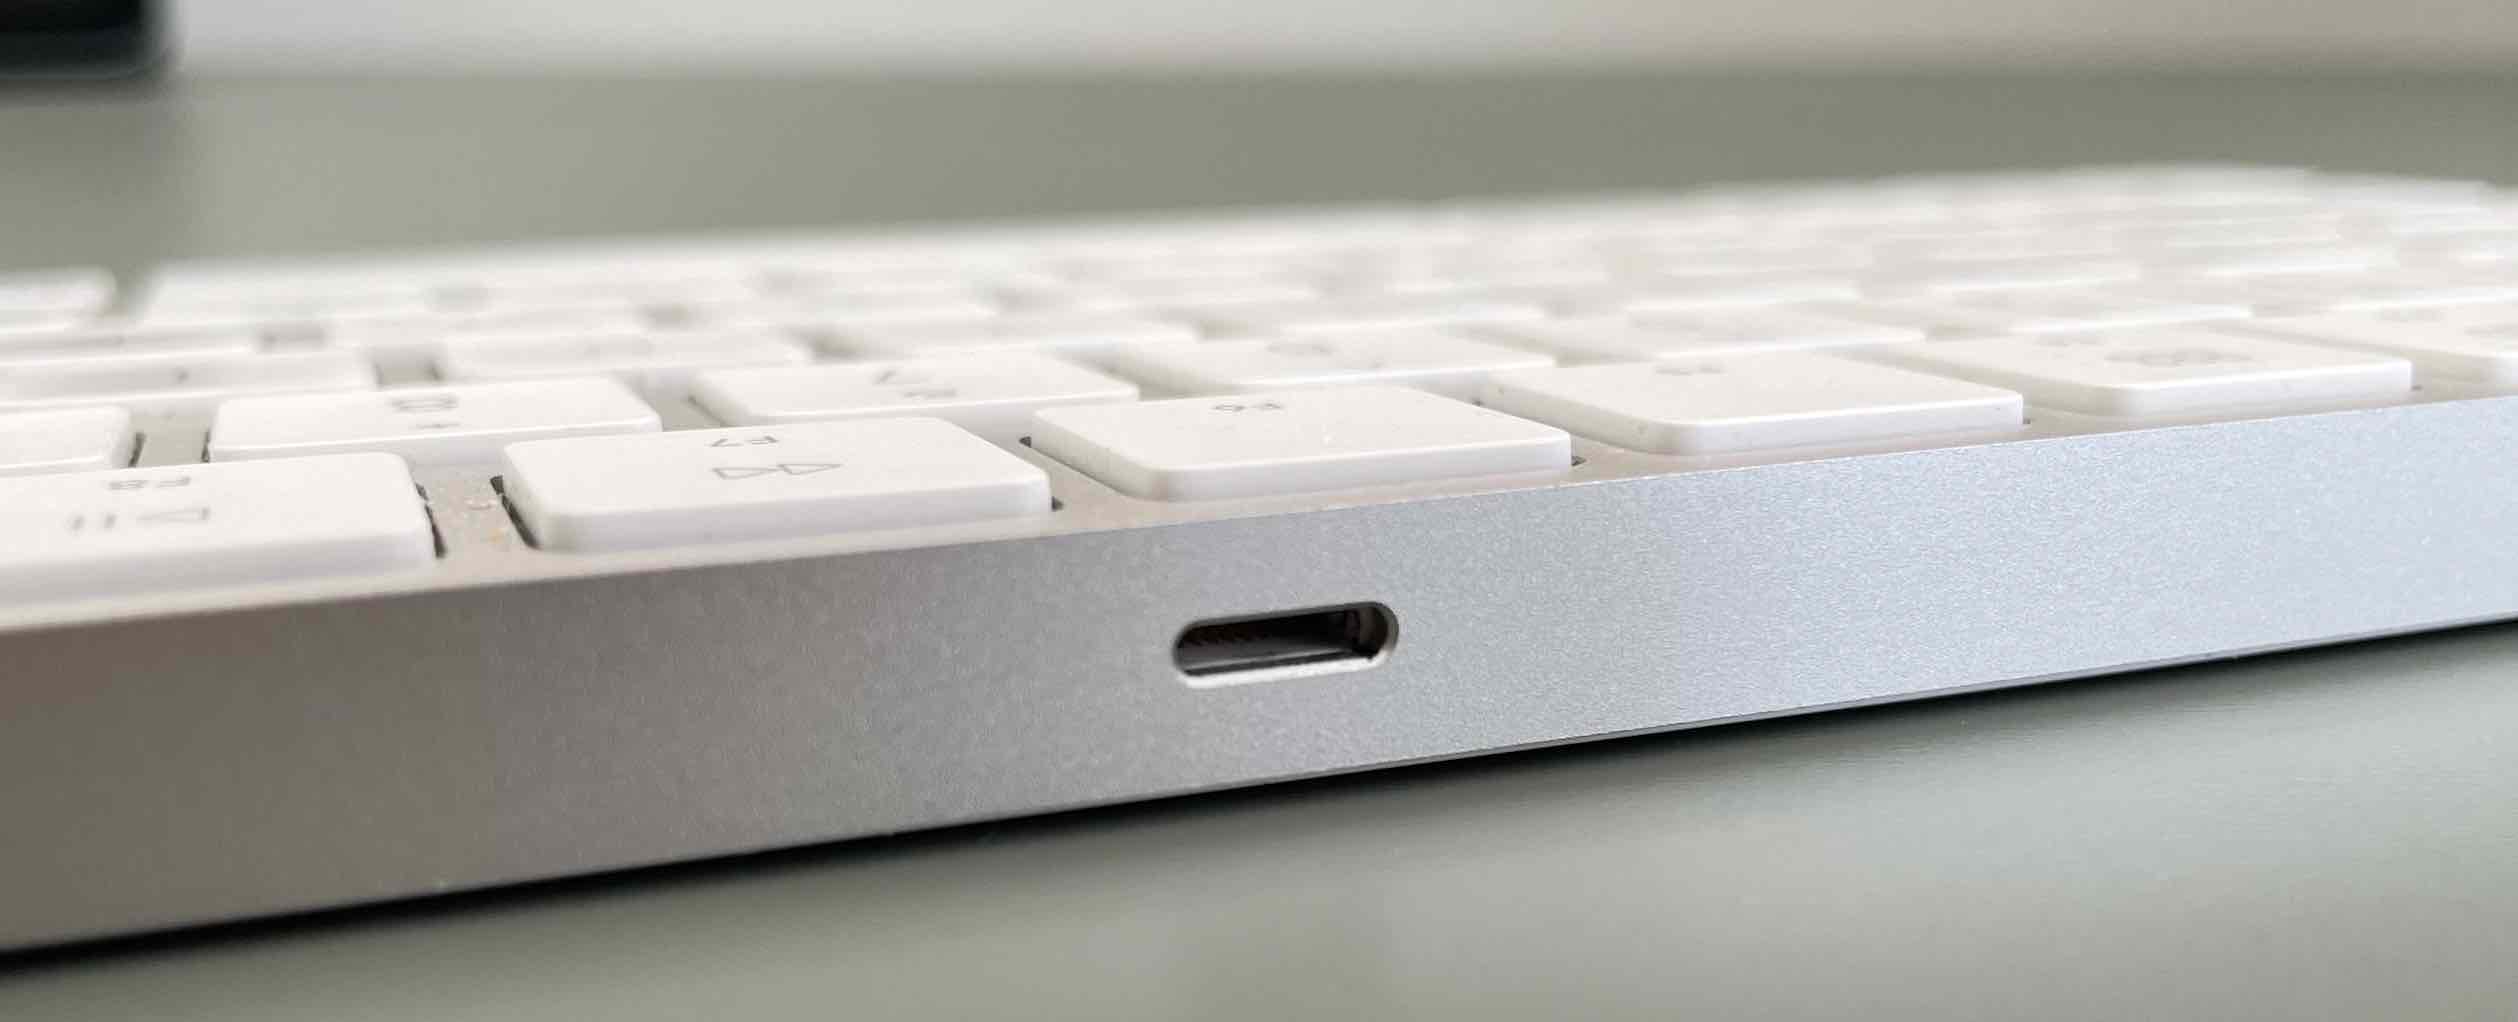 New Mac Magic Keyboard charging